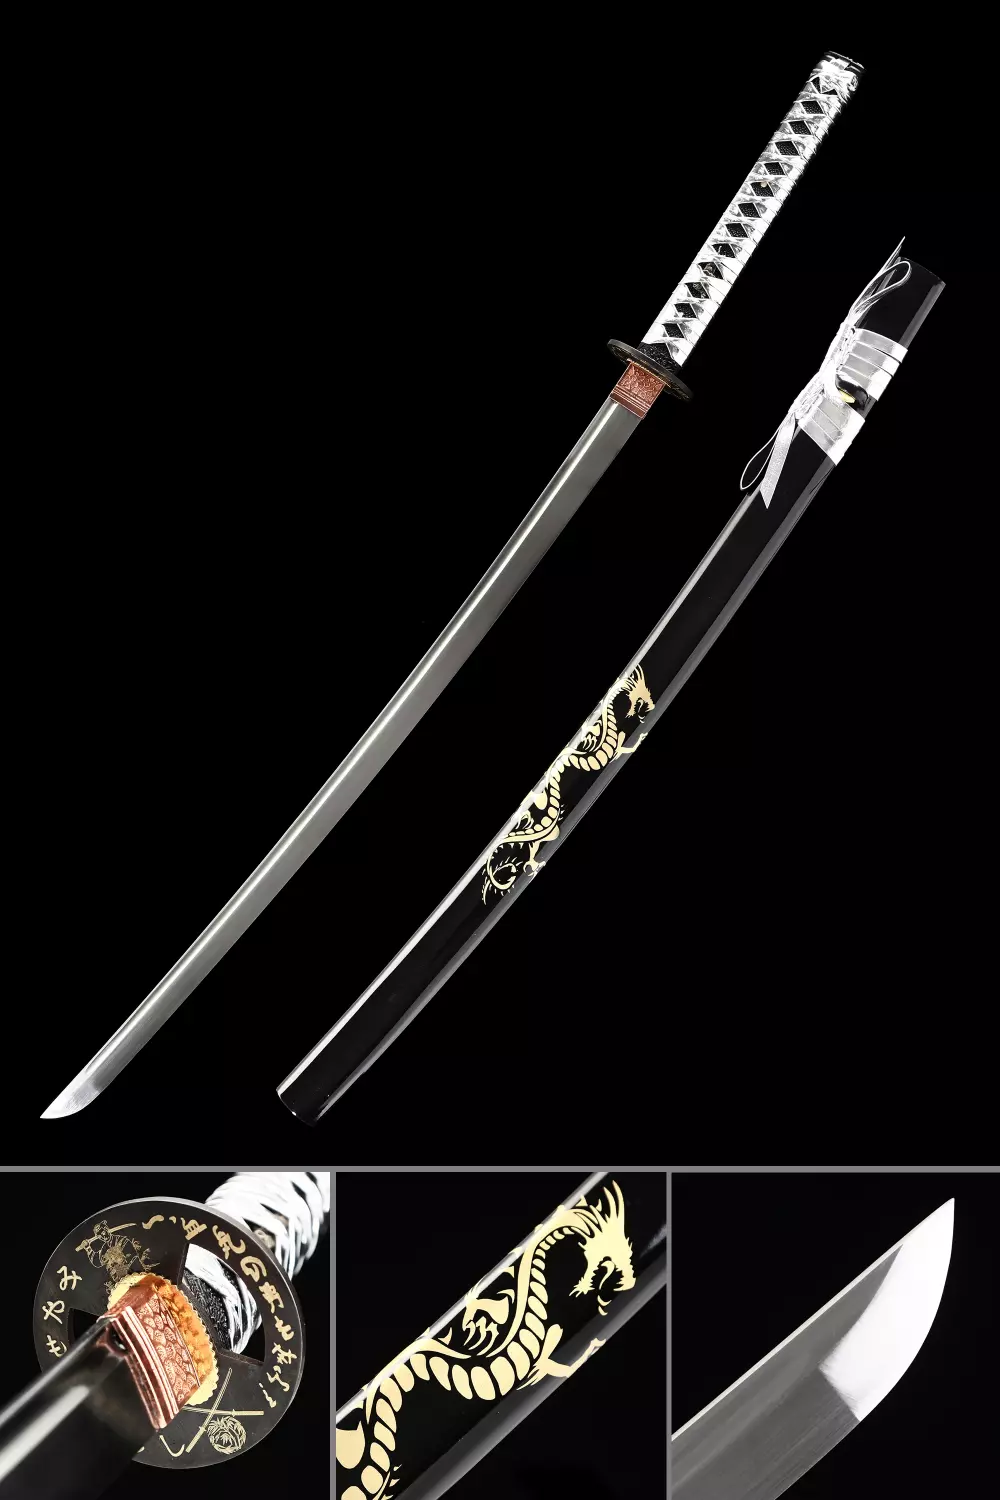 Sliver Dragon Katana Hand Forged Spring steel Combat Japanese Samurai Sword New 